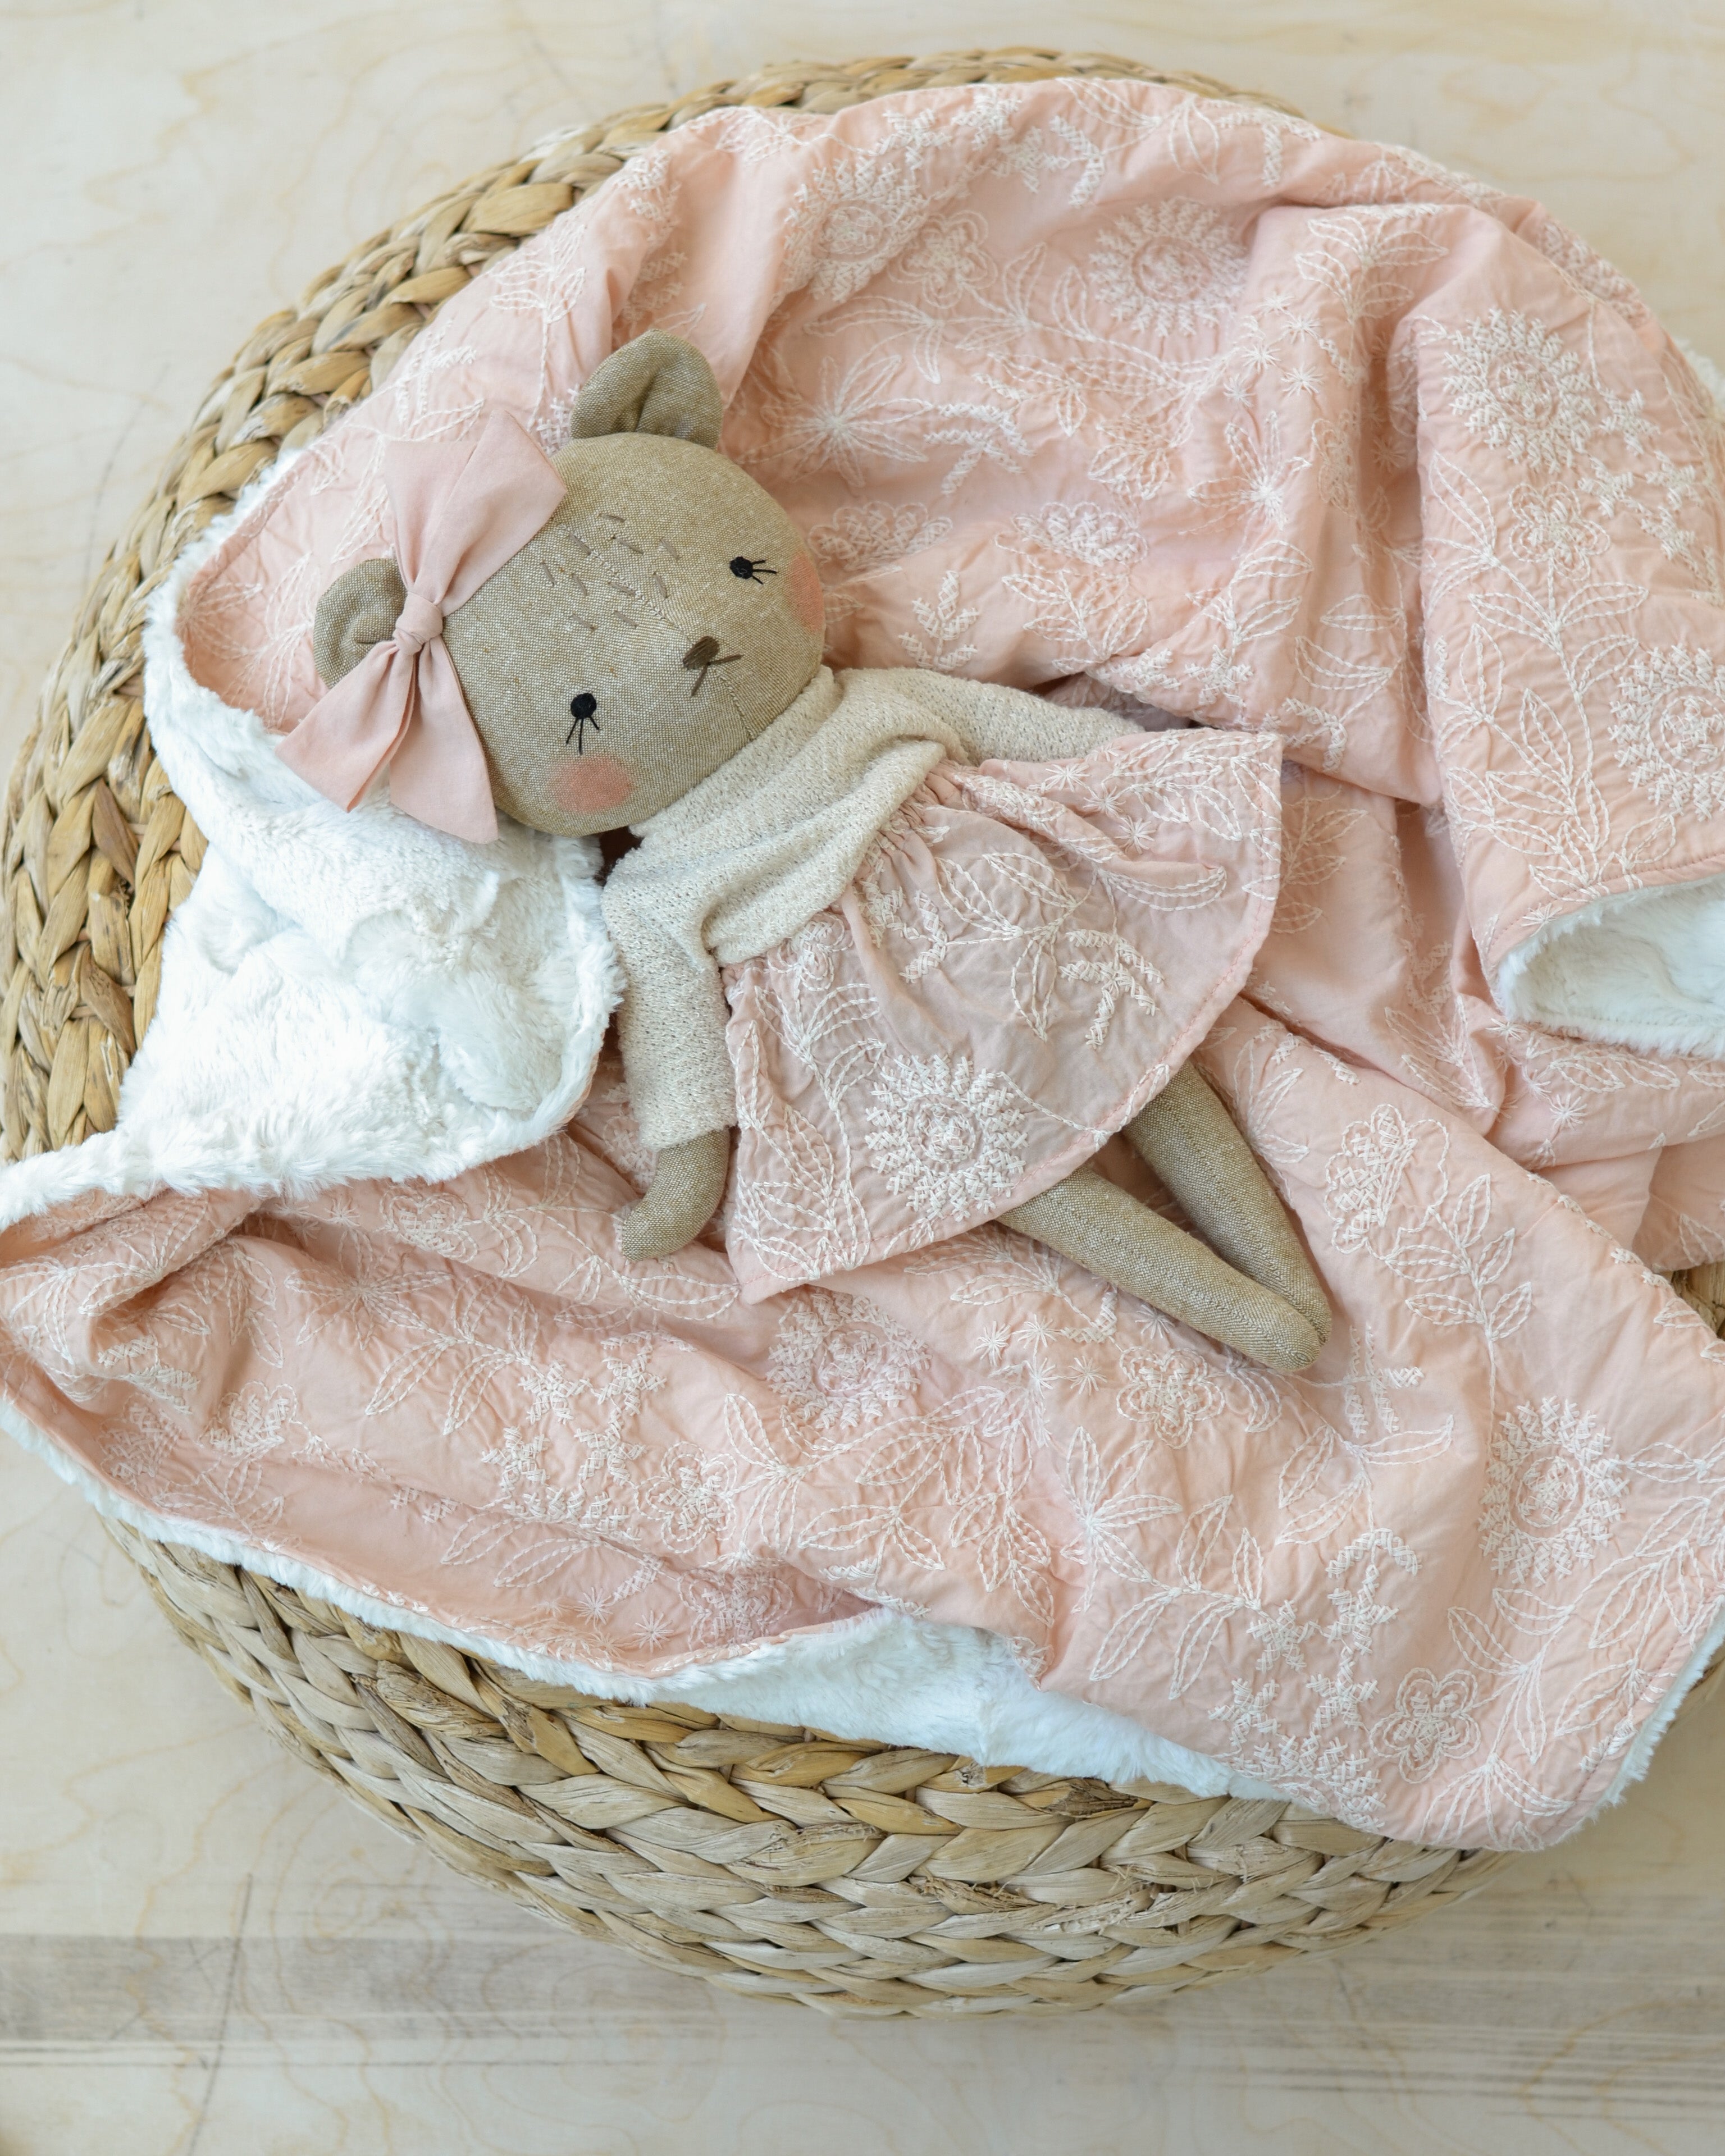 Baby blanket and Bear stuffed animal